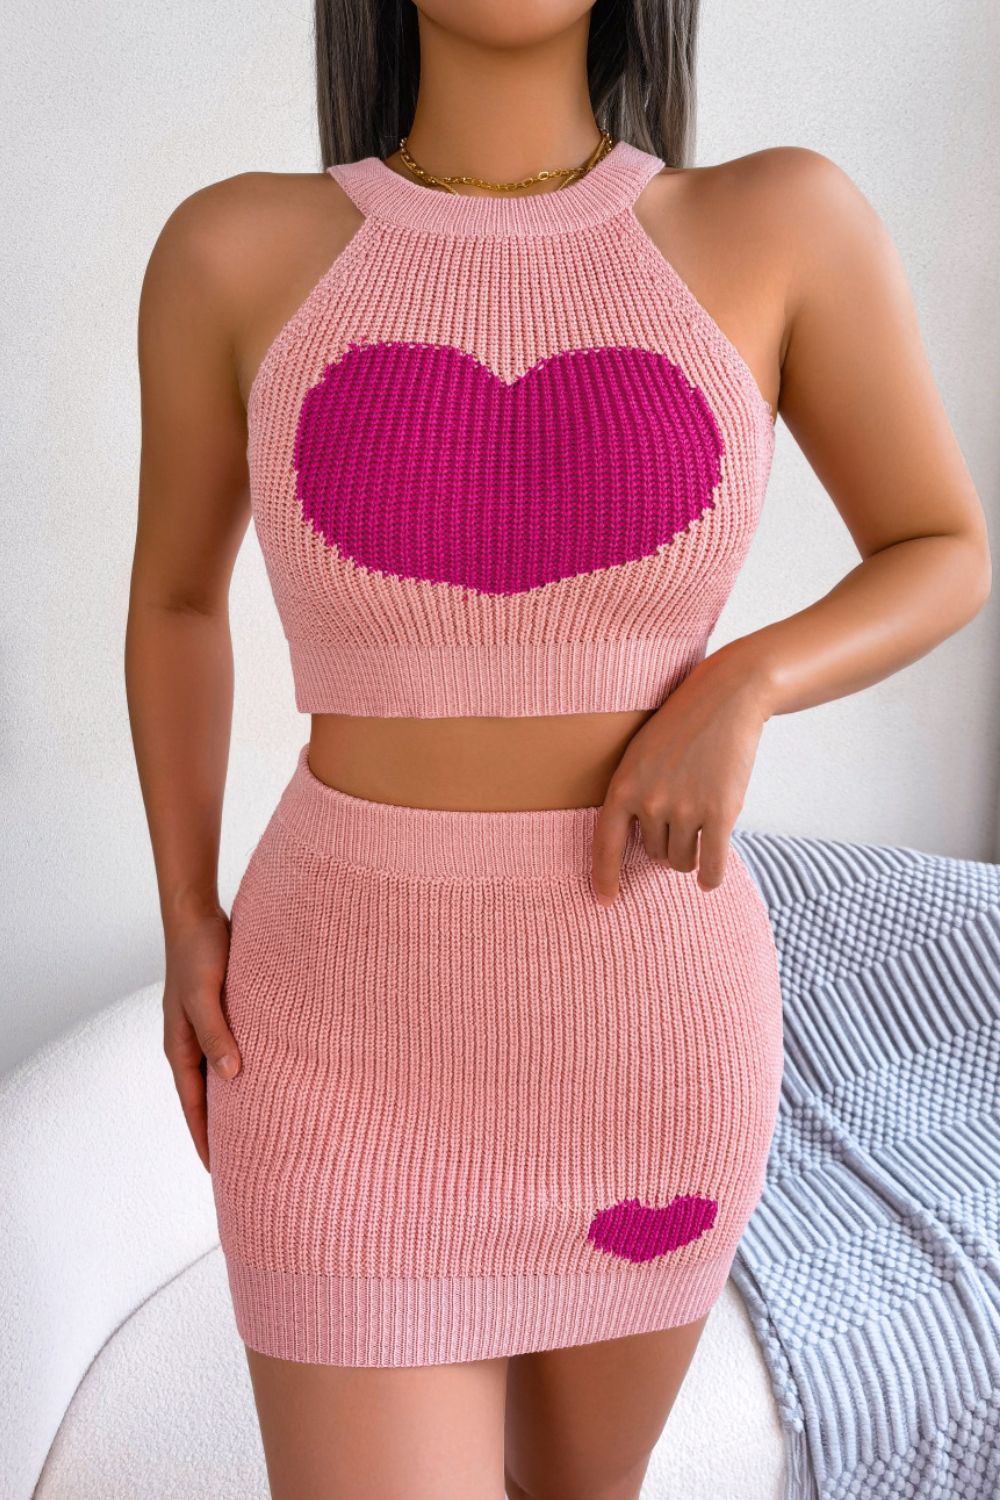 Heart Ribbed Sleeveless Knit Top and Skirt Set